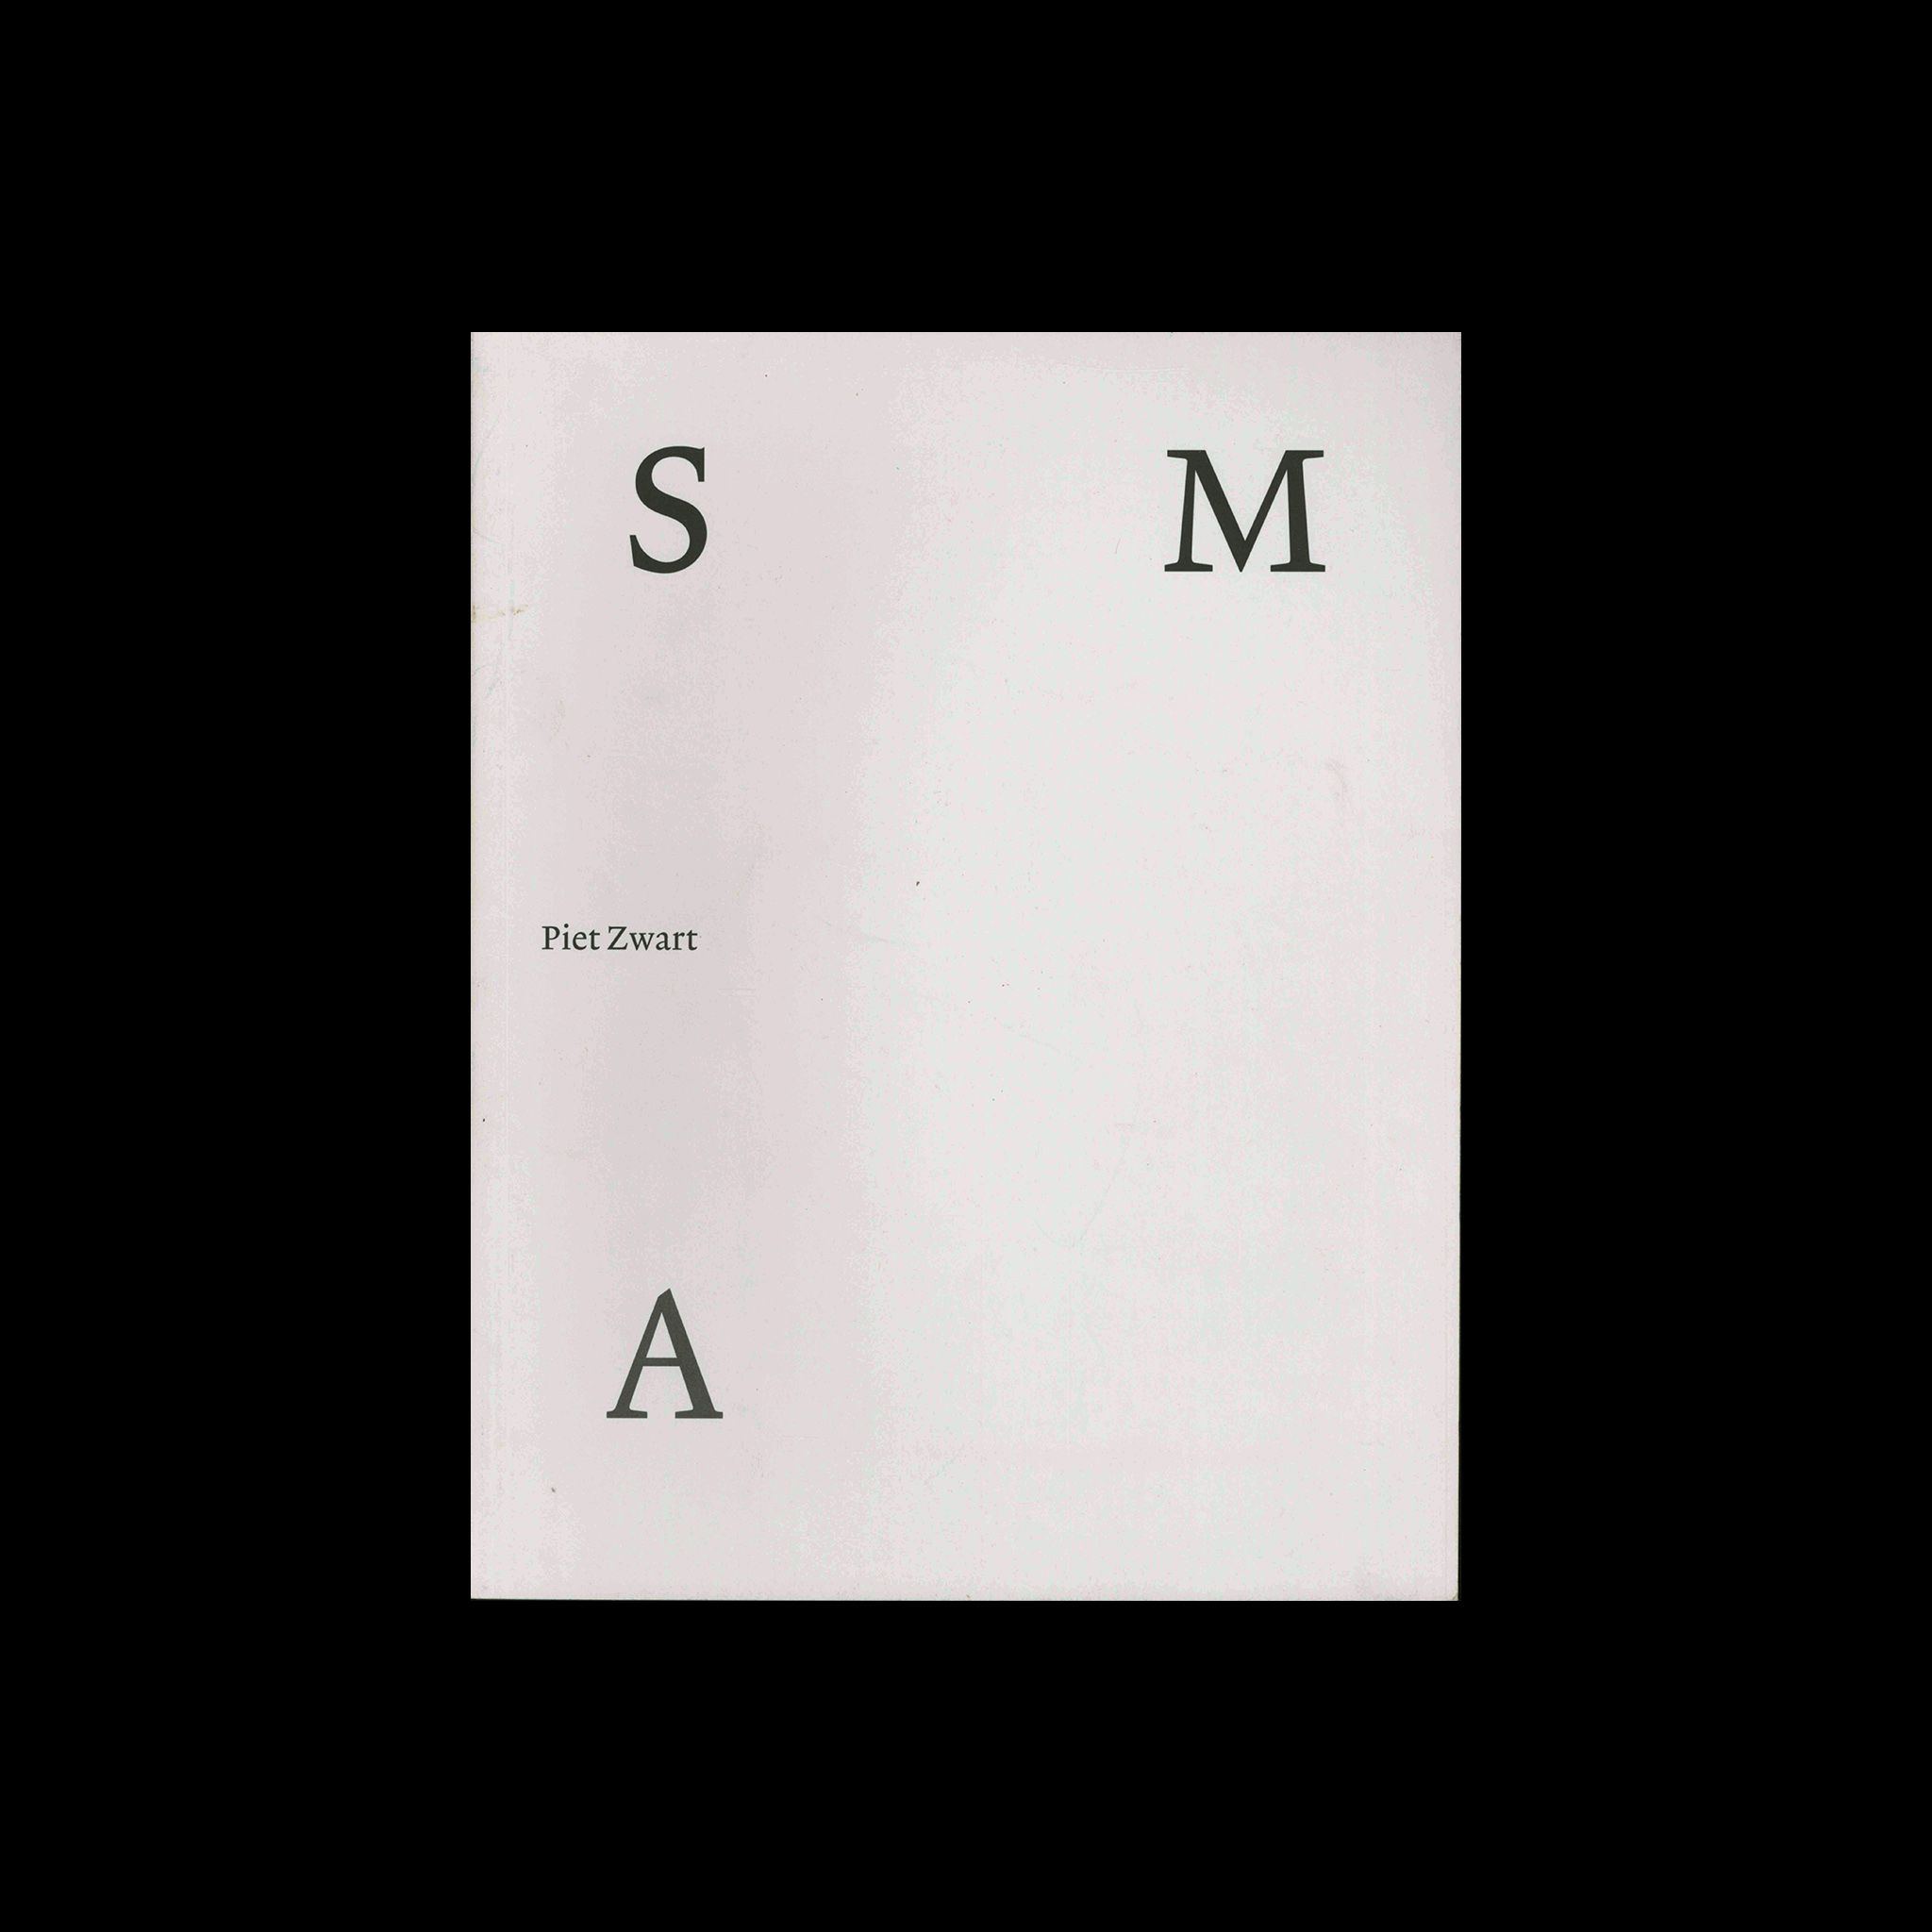 Piet Zwart, Stedelijk Museum, Amsterdam, 1996. Book design by Walter Nikkels